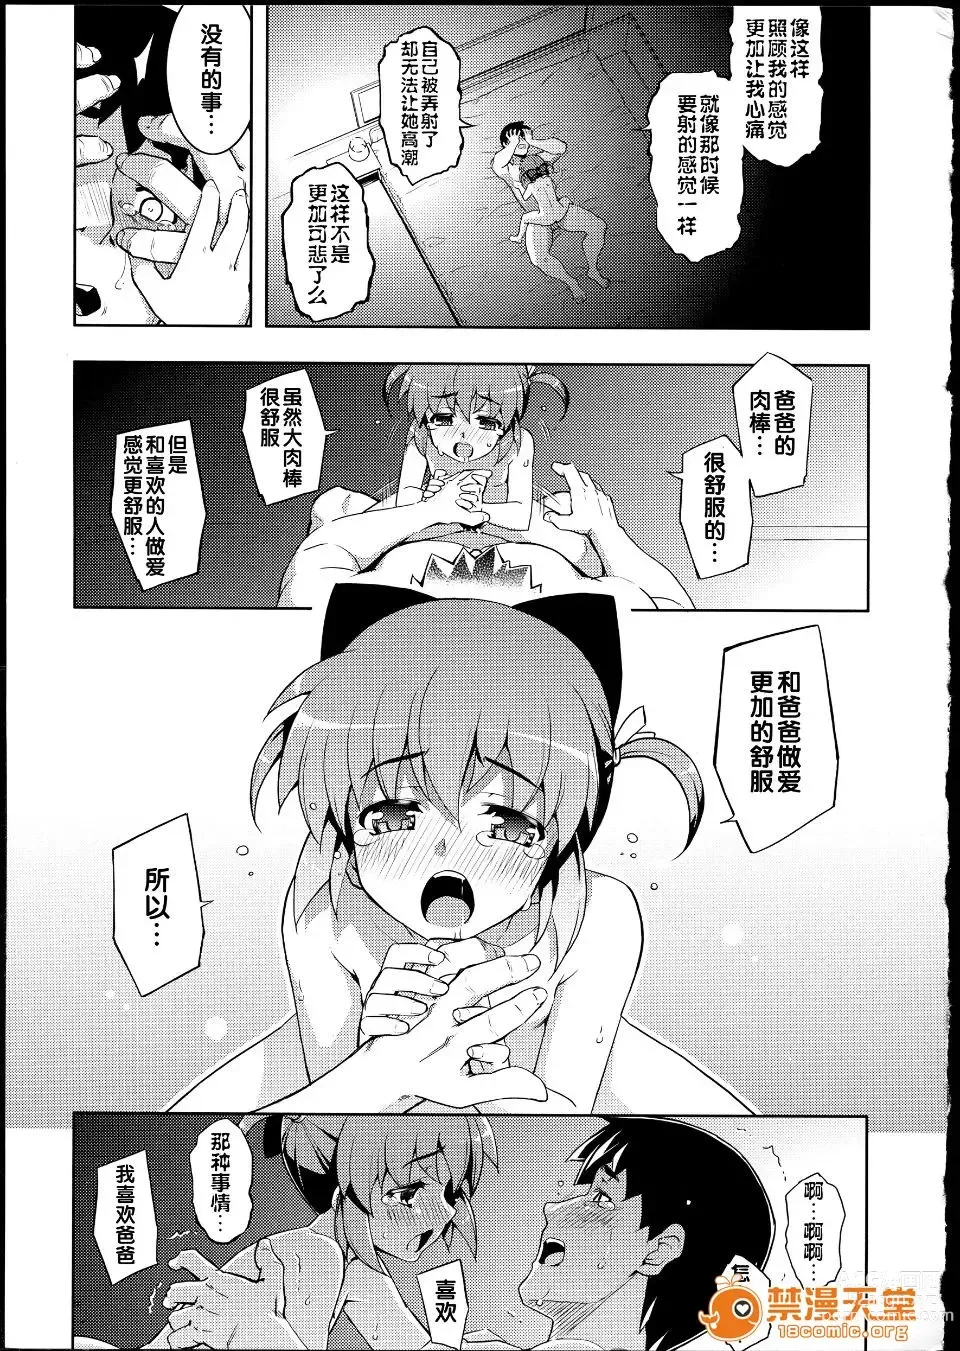 Page 226 of manga NTR²